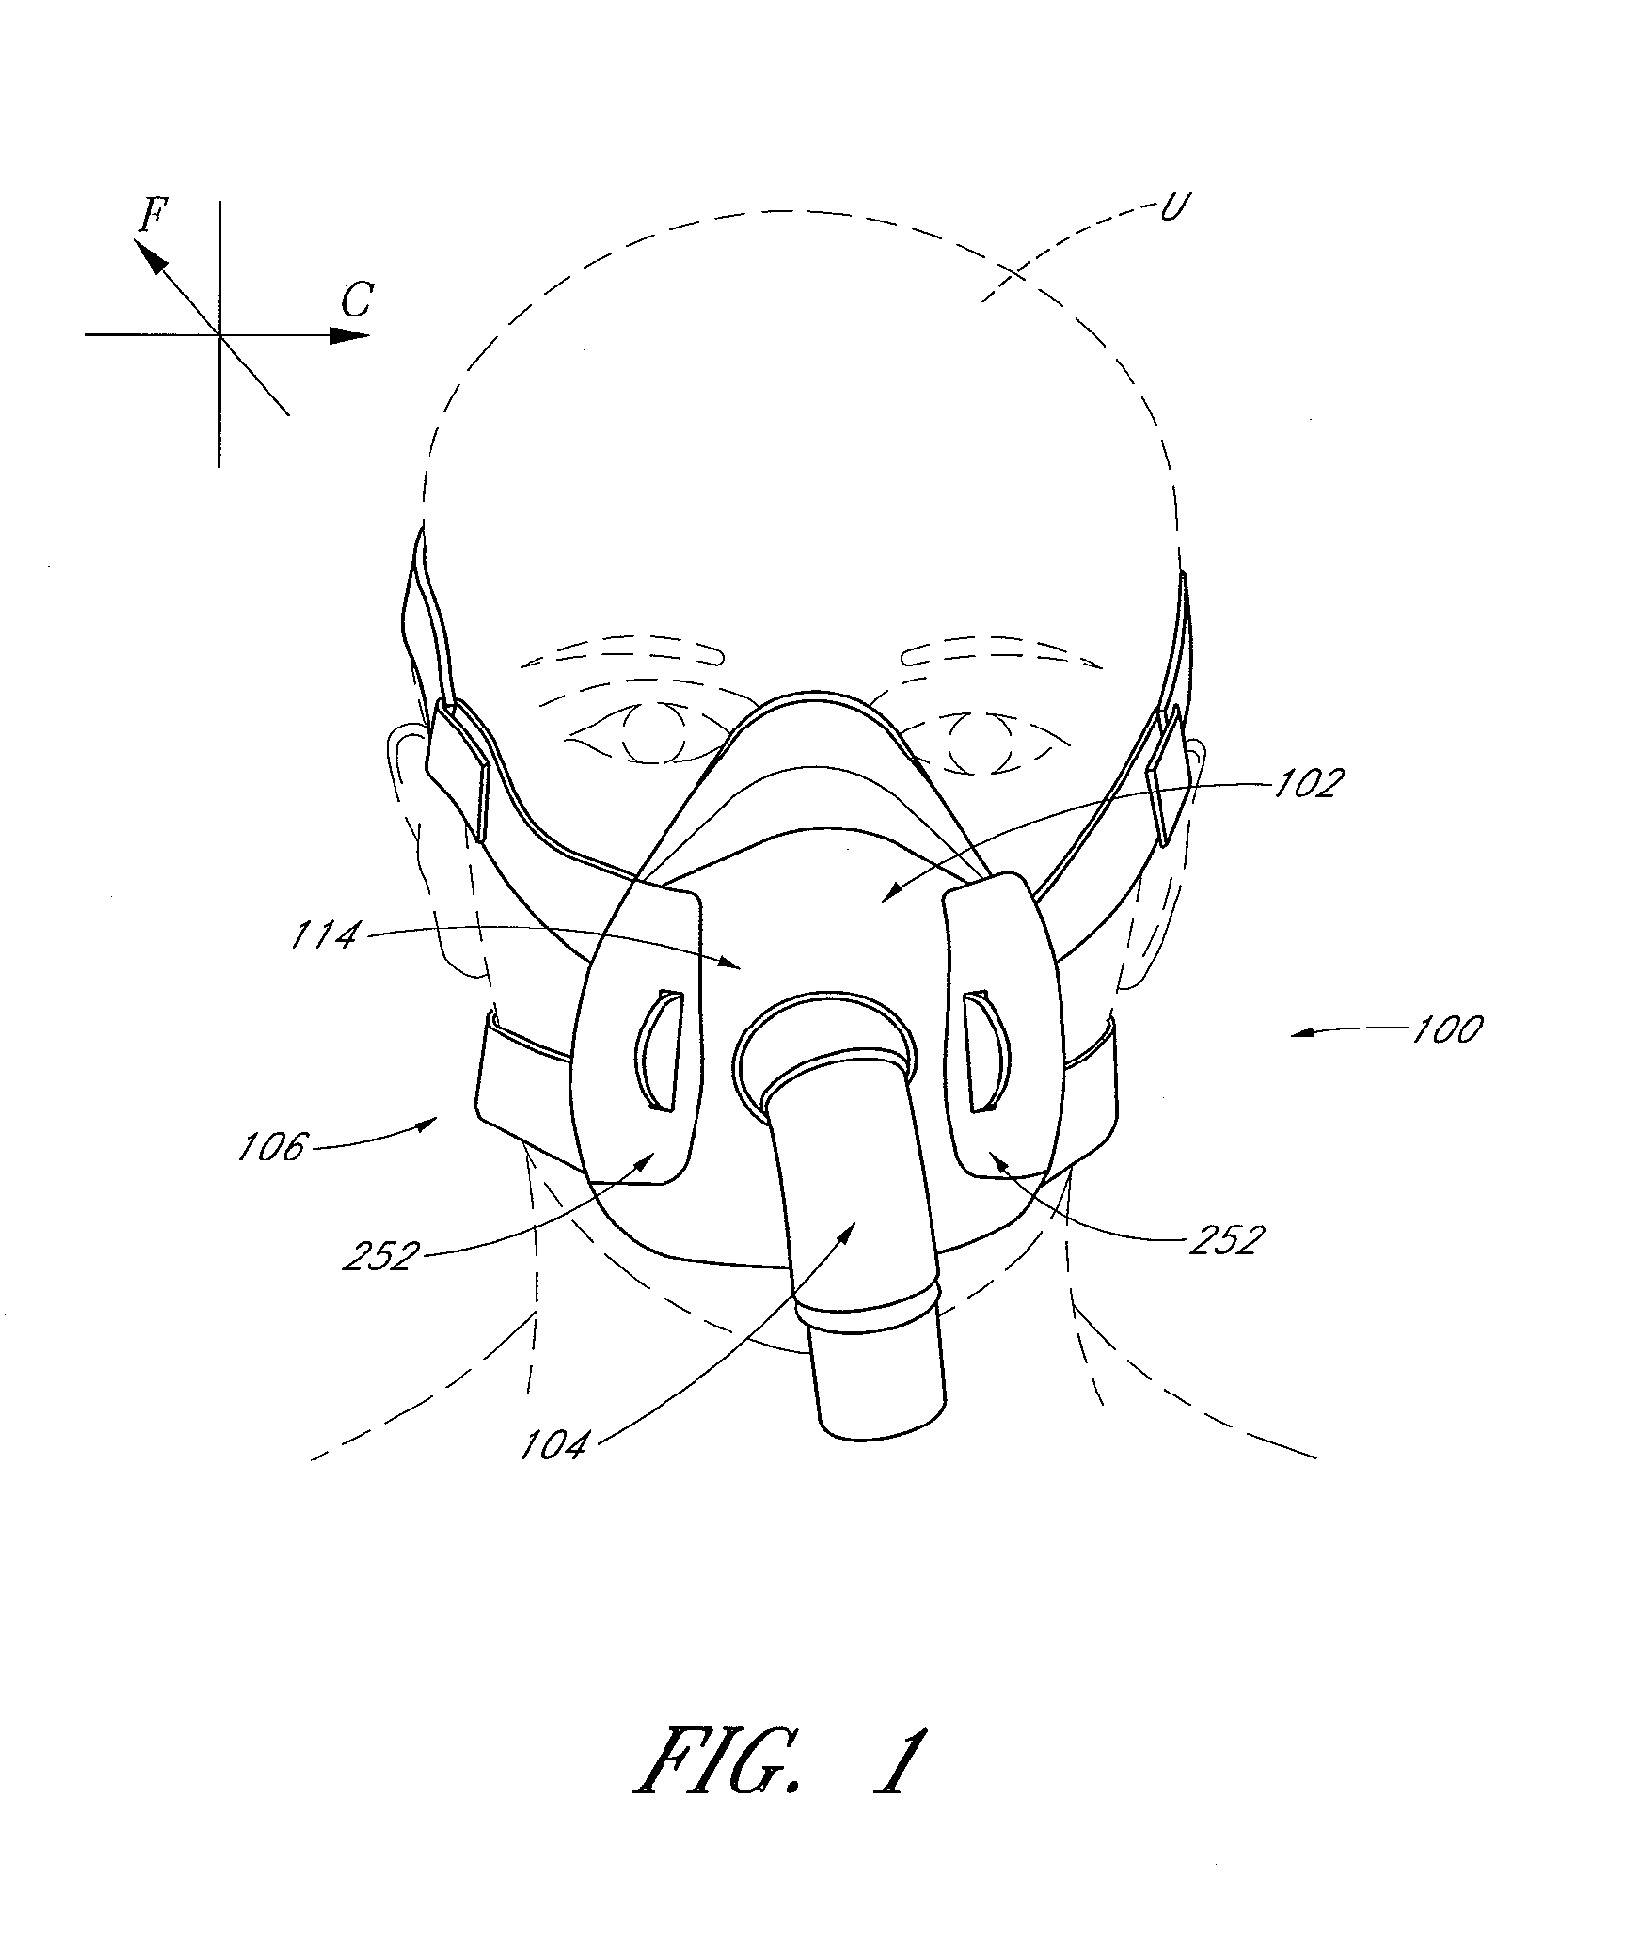 Interface comprising a rolling nasal bridge portion